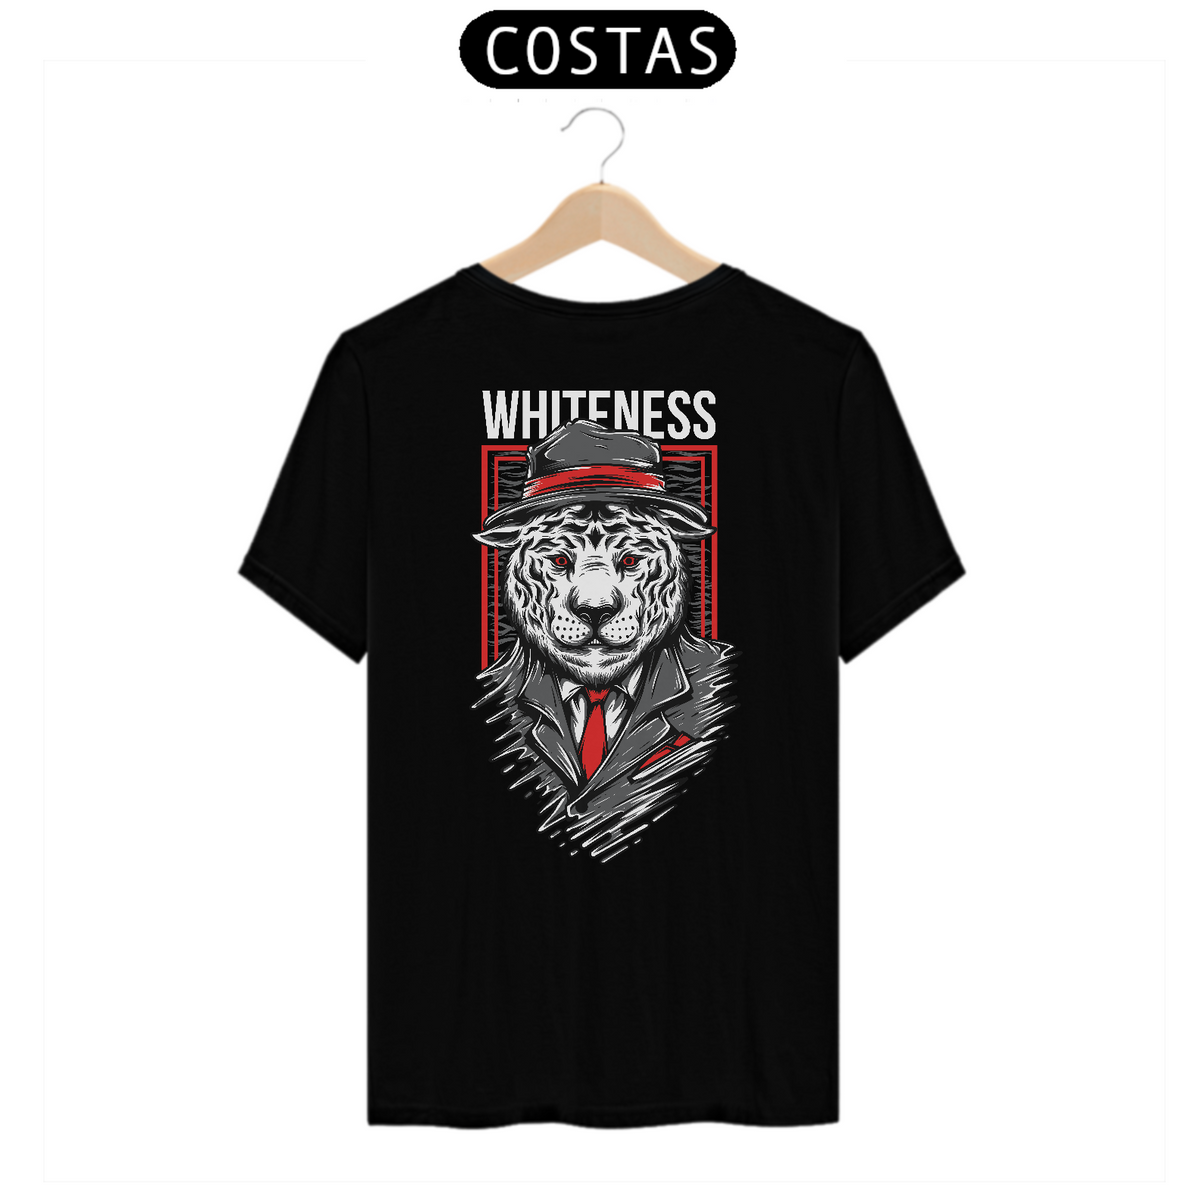 Nome do produto: Camiseta Whiteness